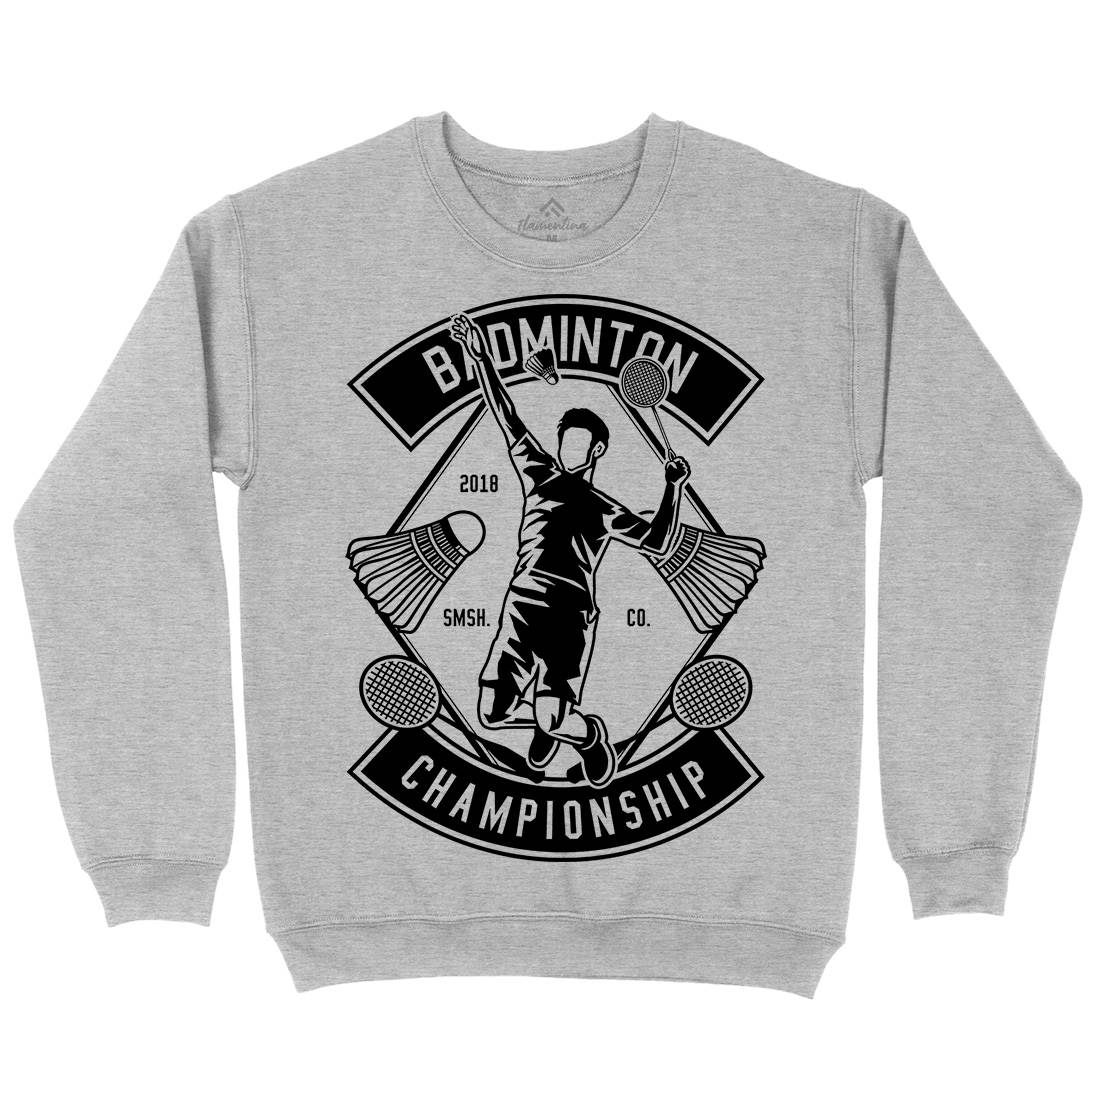 Badminton Championship Kids Crew Neck Sweatshirt Sport B486